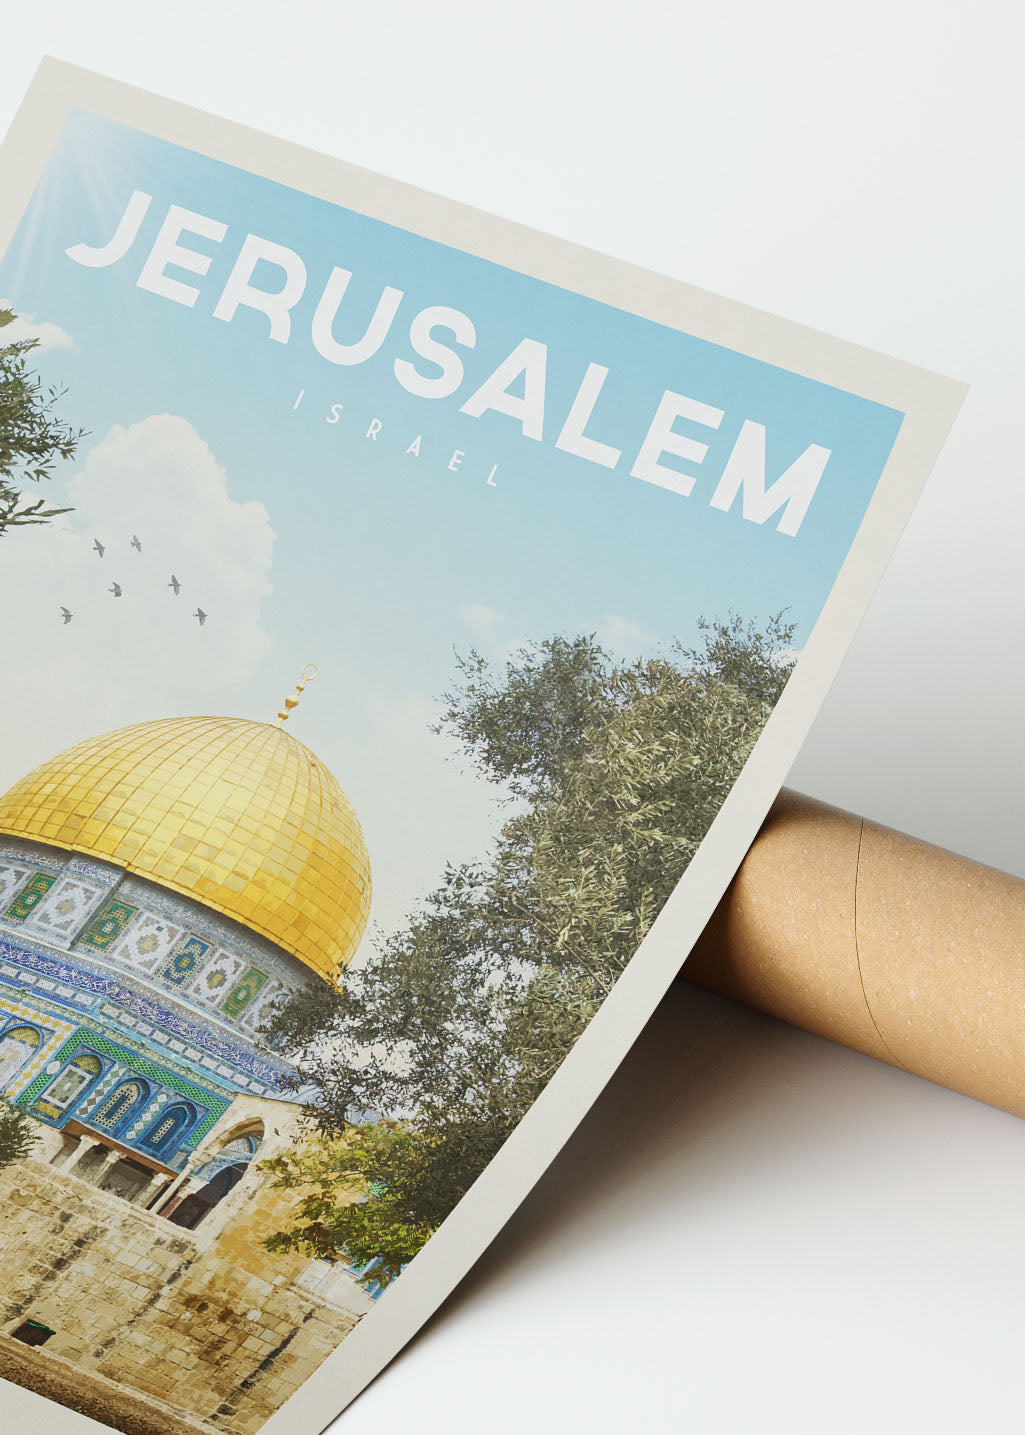 Jerusalem, Israel - Vintage Travel Print